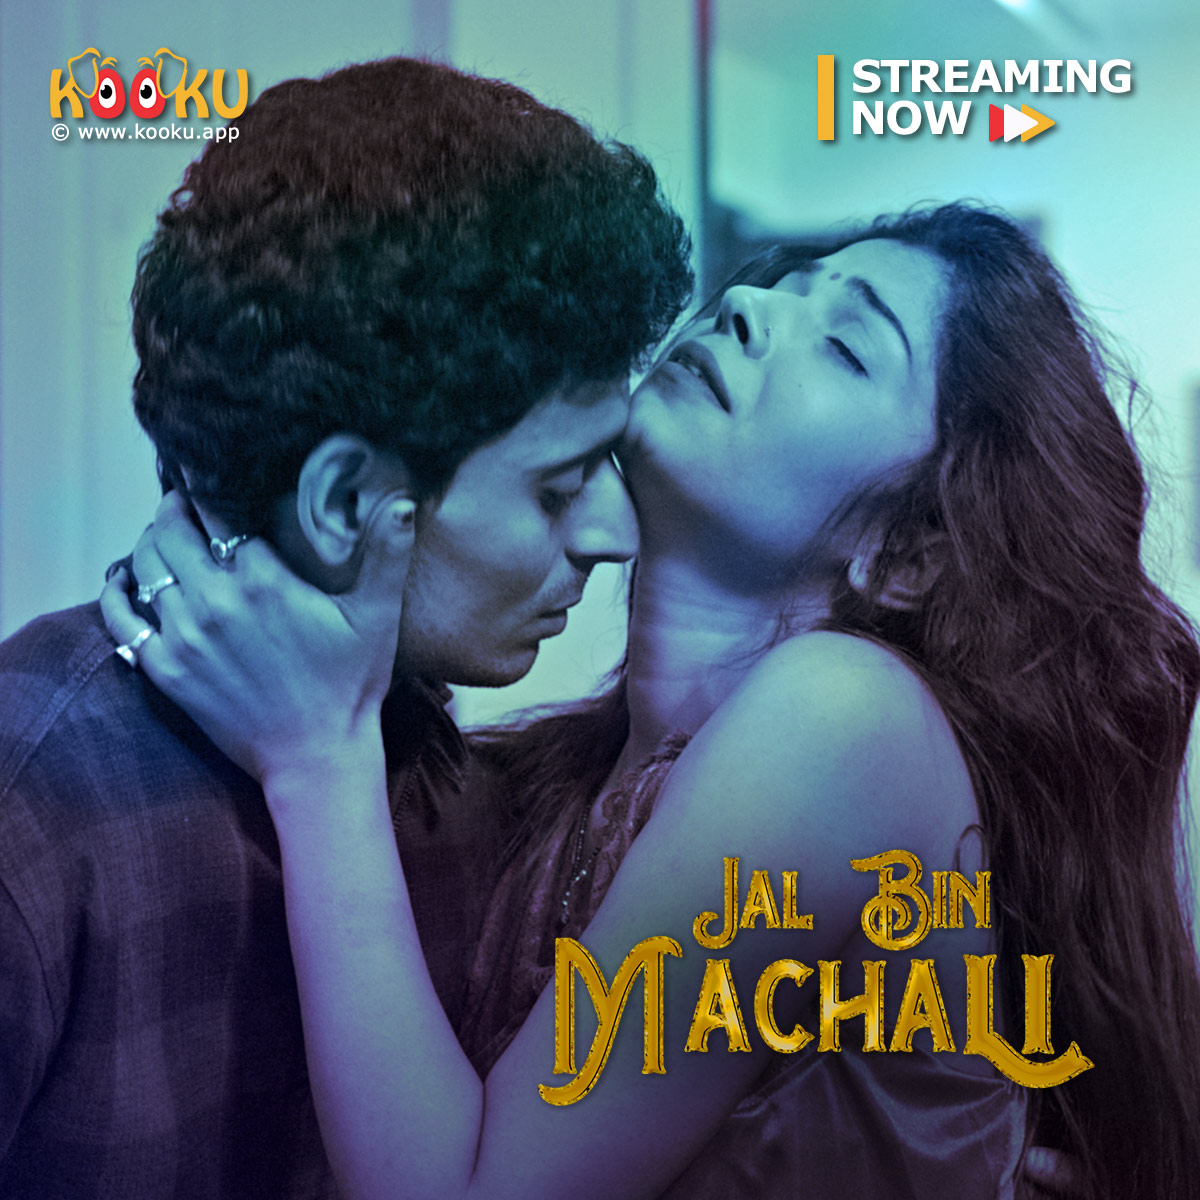 18+ Jal Bin Machali 2020 Hindi S01E02 Kokku Original Web Series 1080p HDRip Download